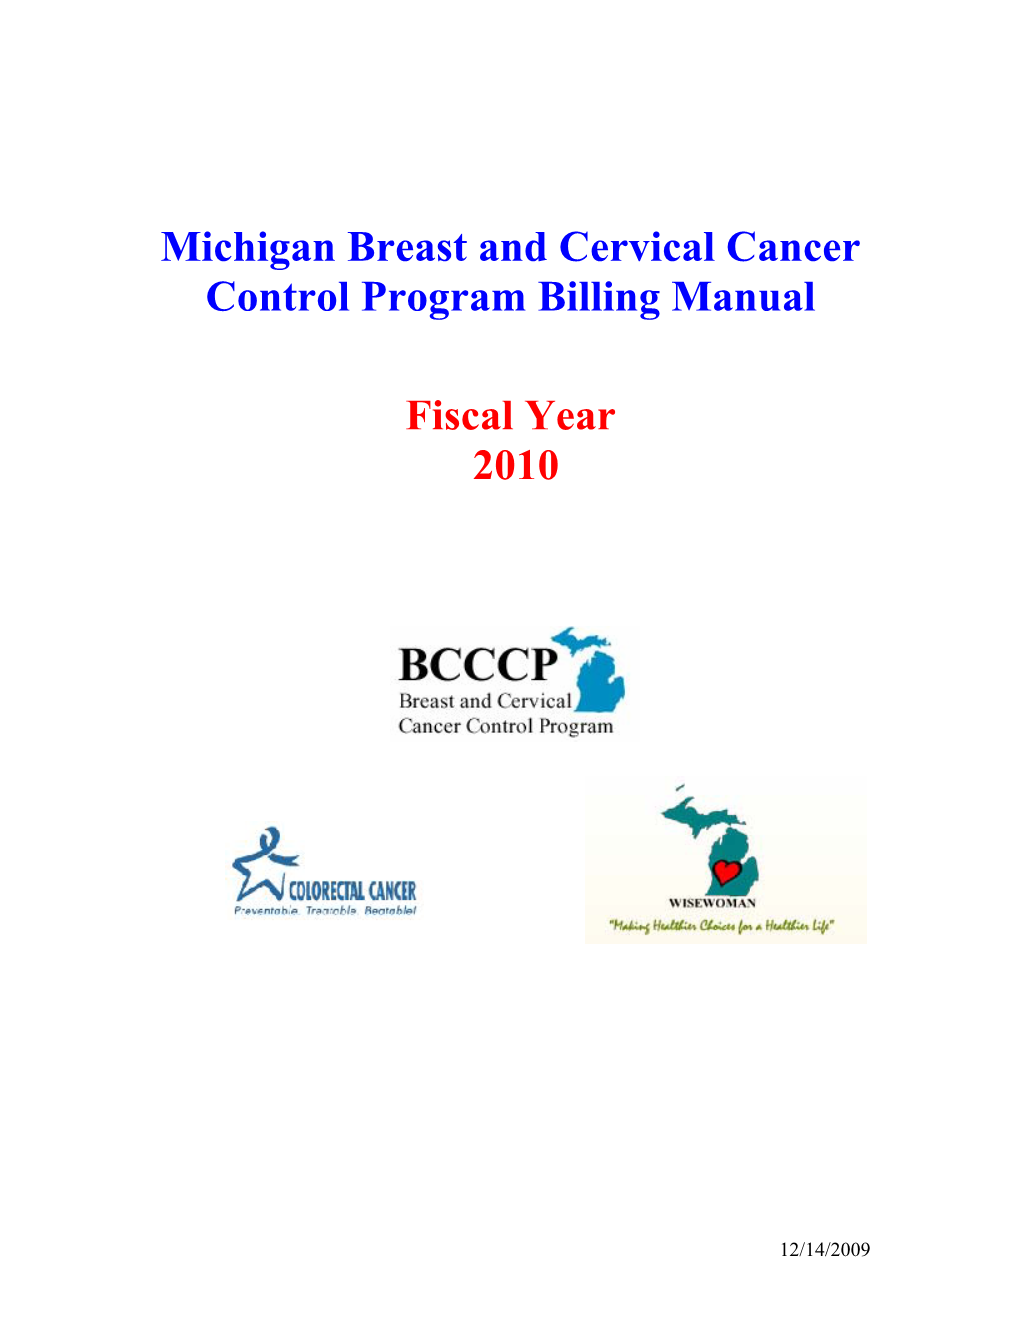 Michigan Breast and Cervical Cancer Control Program Billing Manual